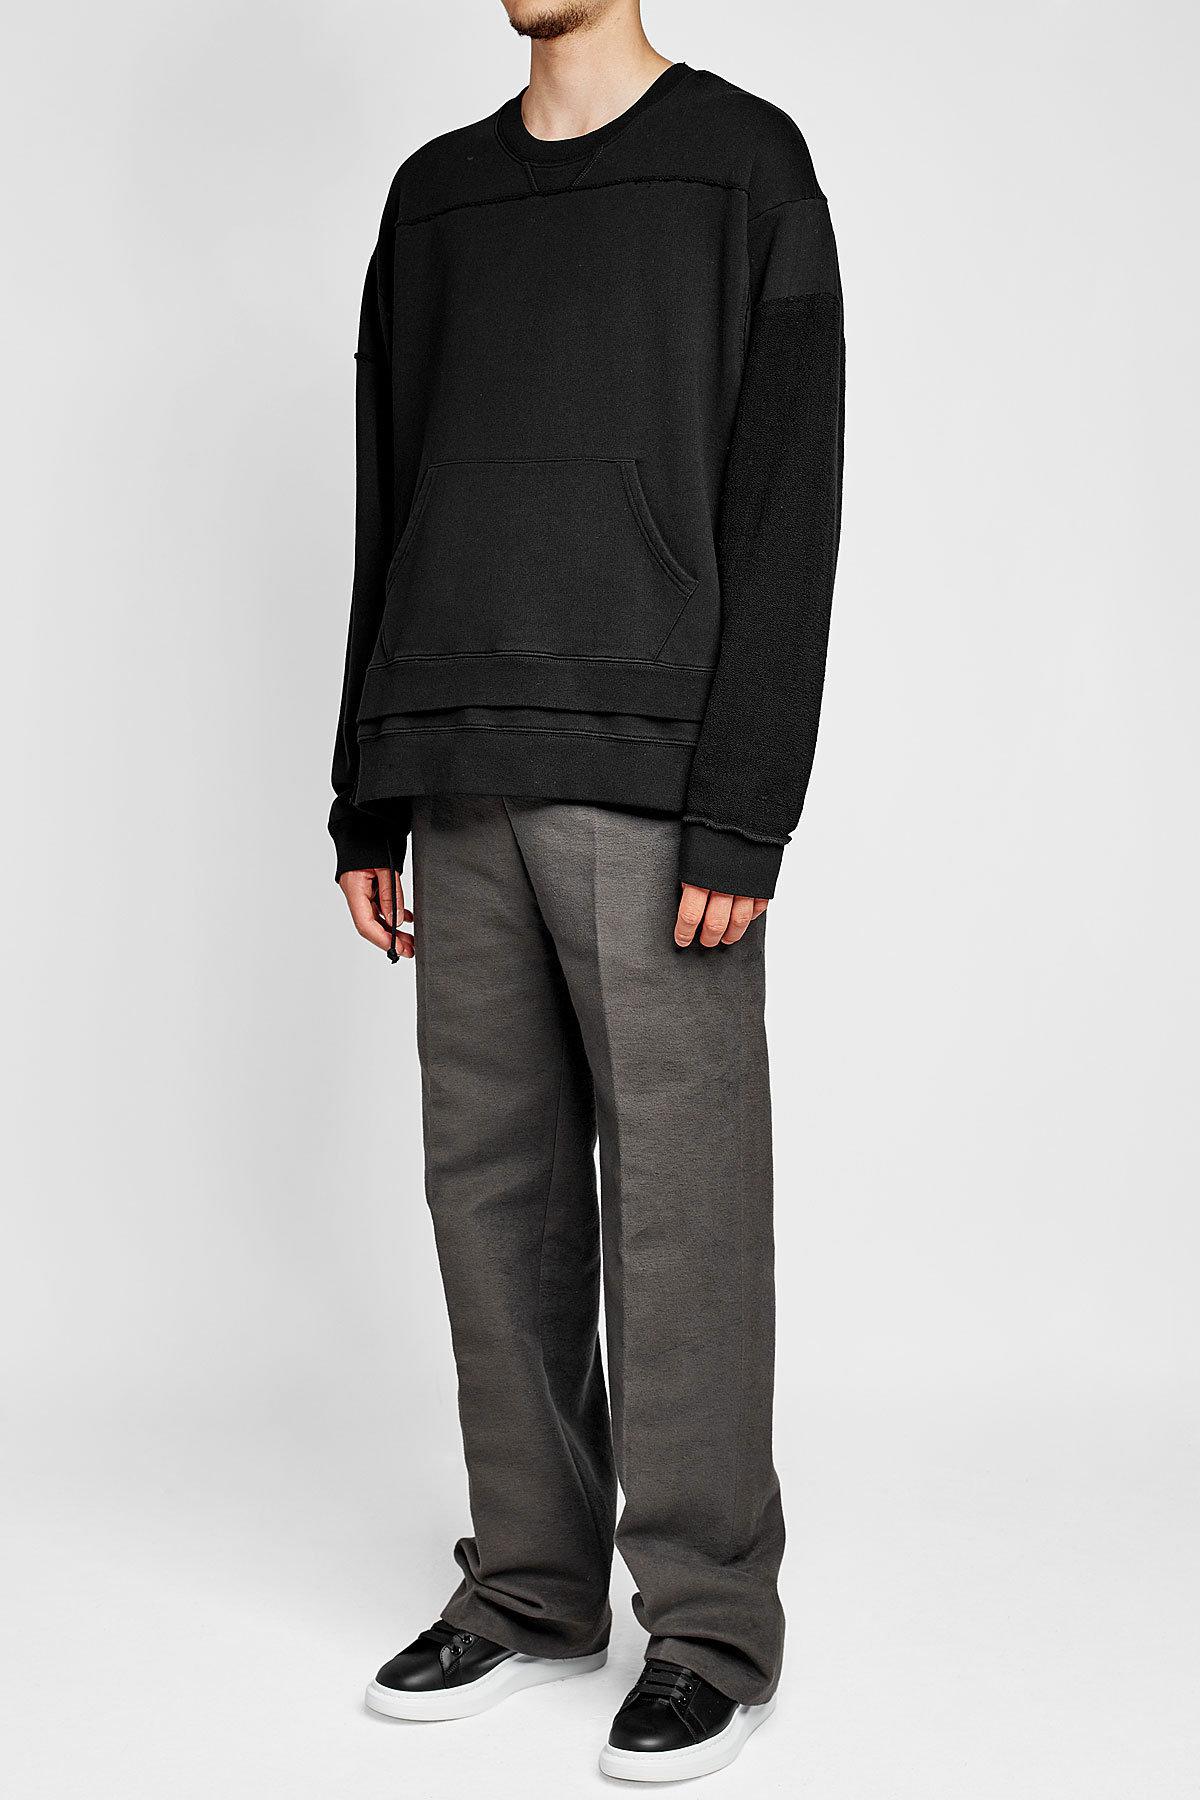 Lyst - Maison Margiela Cotton Patchwork Sweatshirt in Black for Men